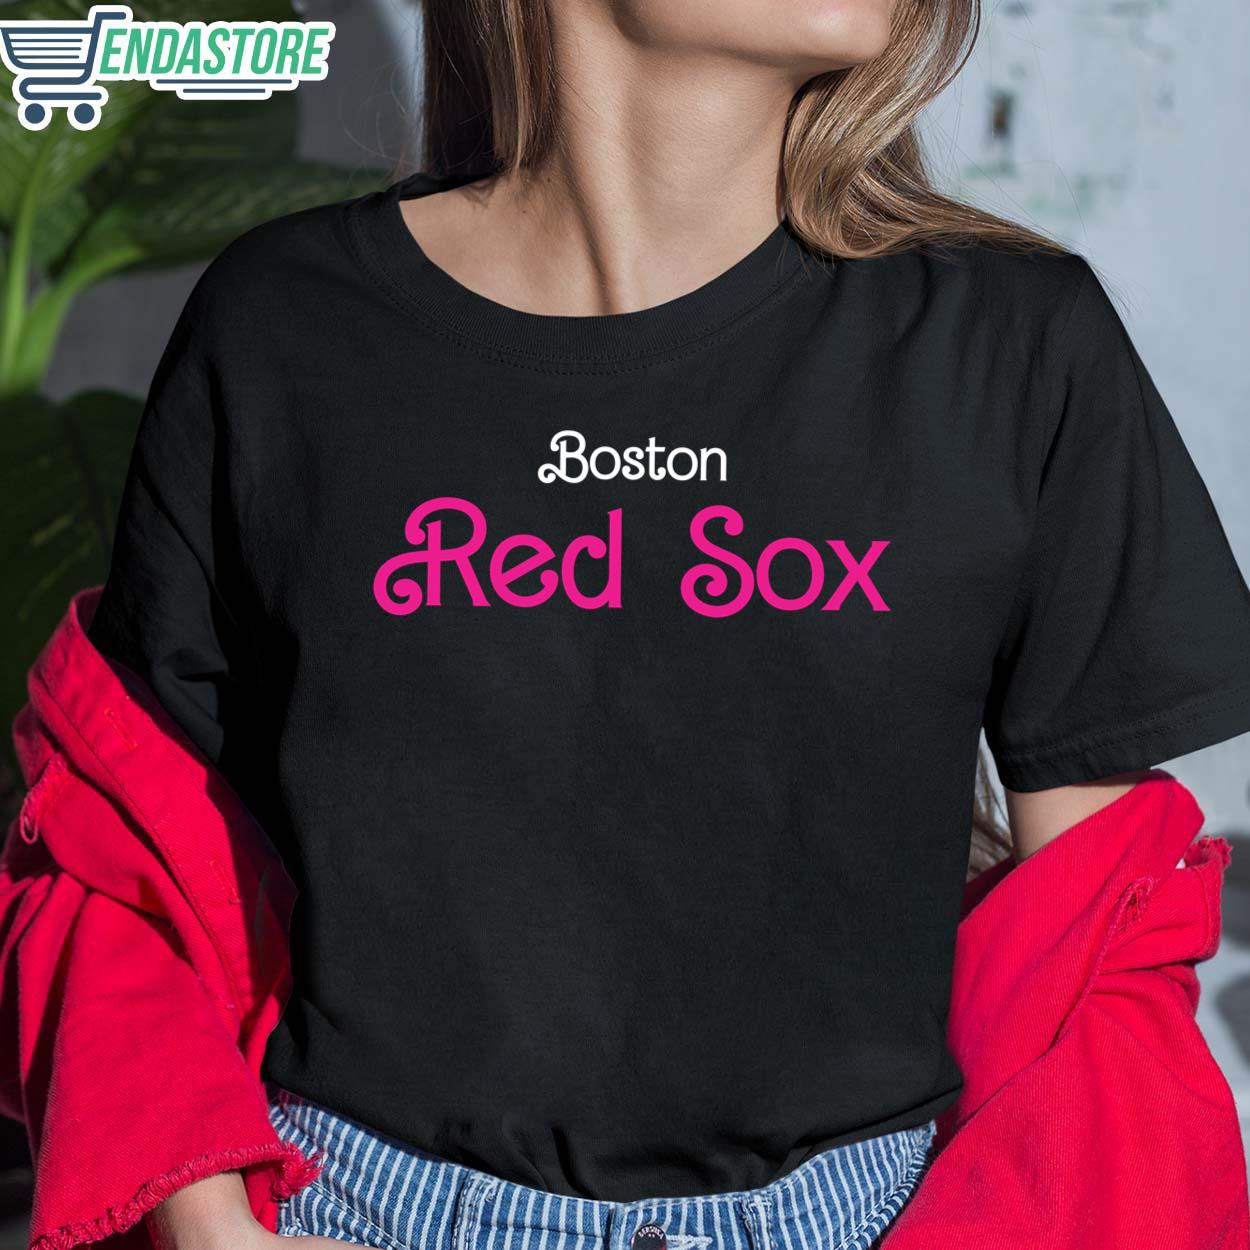 Barbie Night  Boston Red Sox